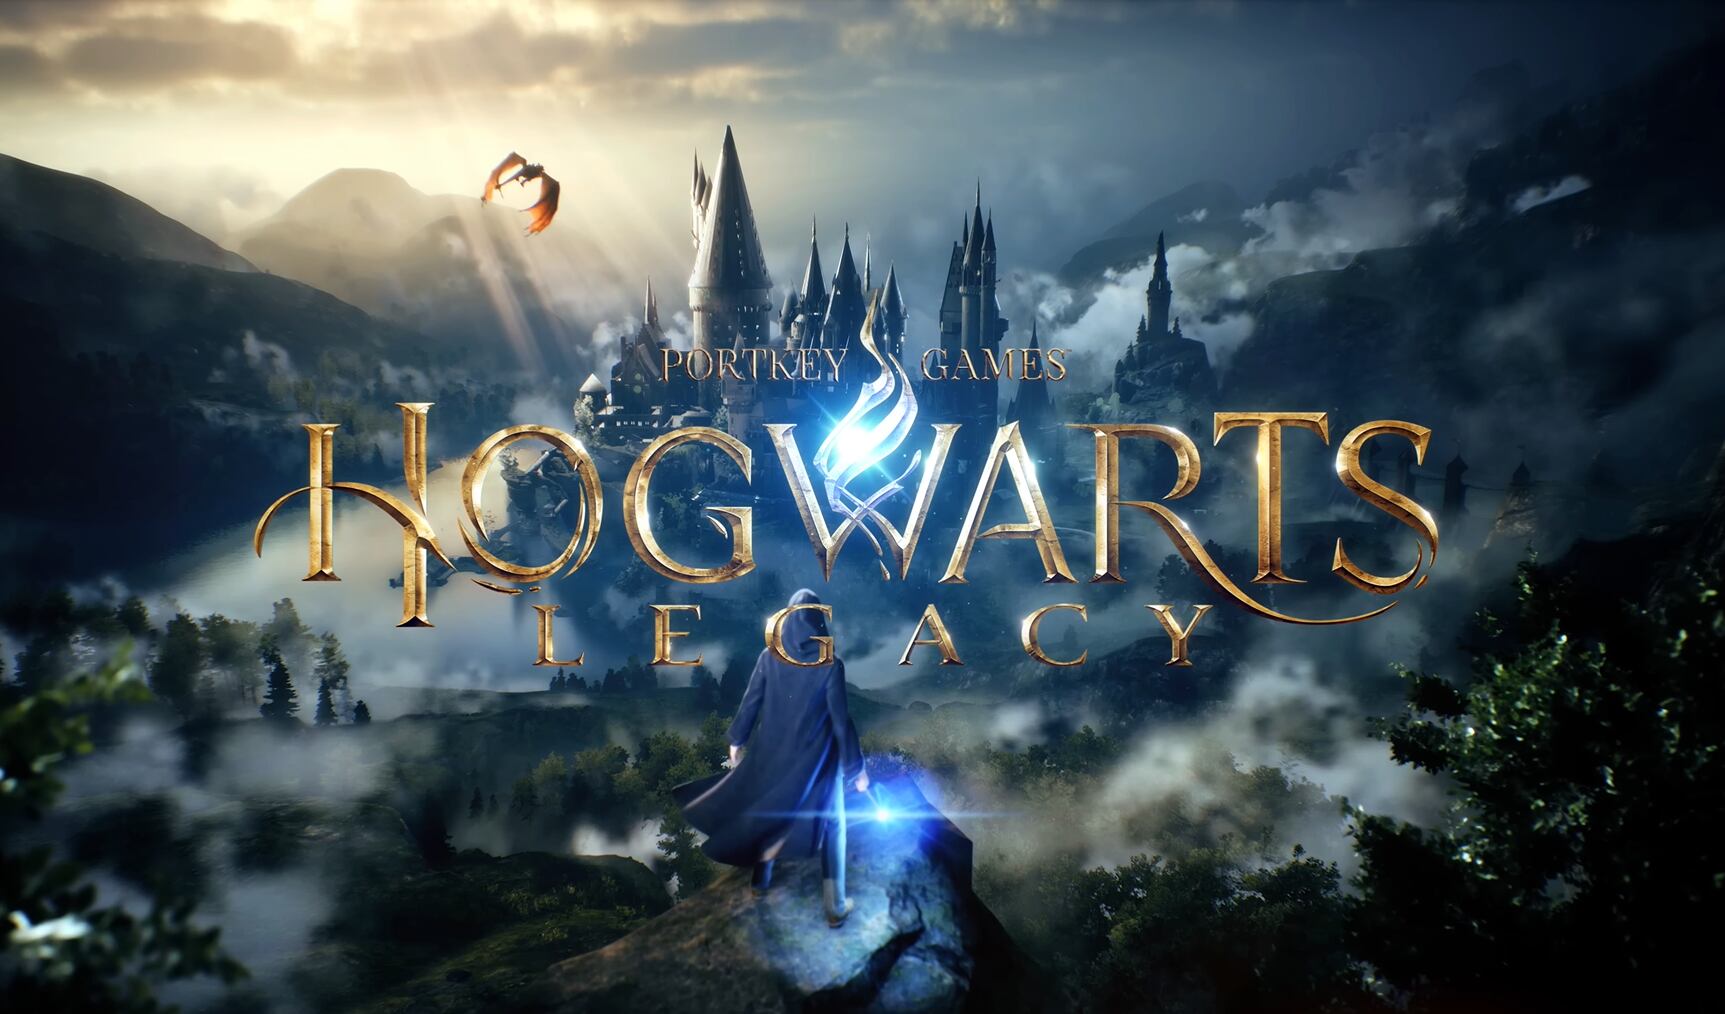 Hogwarts Legacy: Requisitos mínimos para poder jugarlo